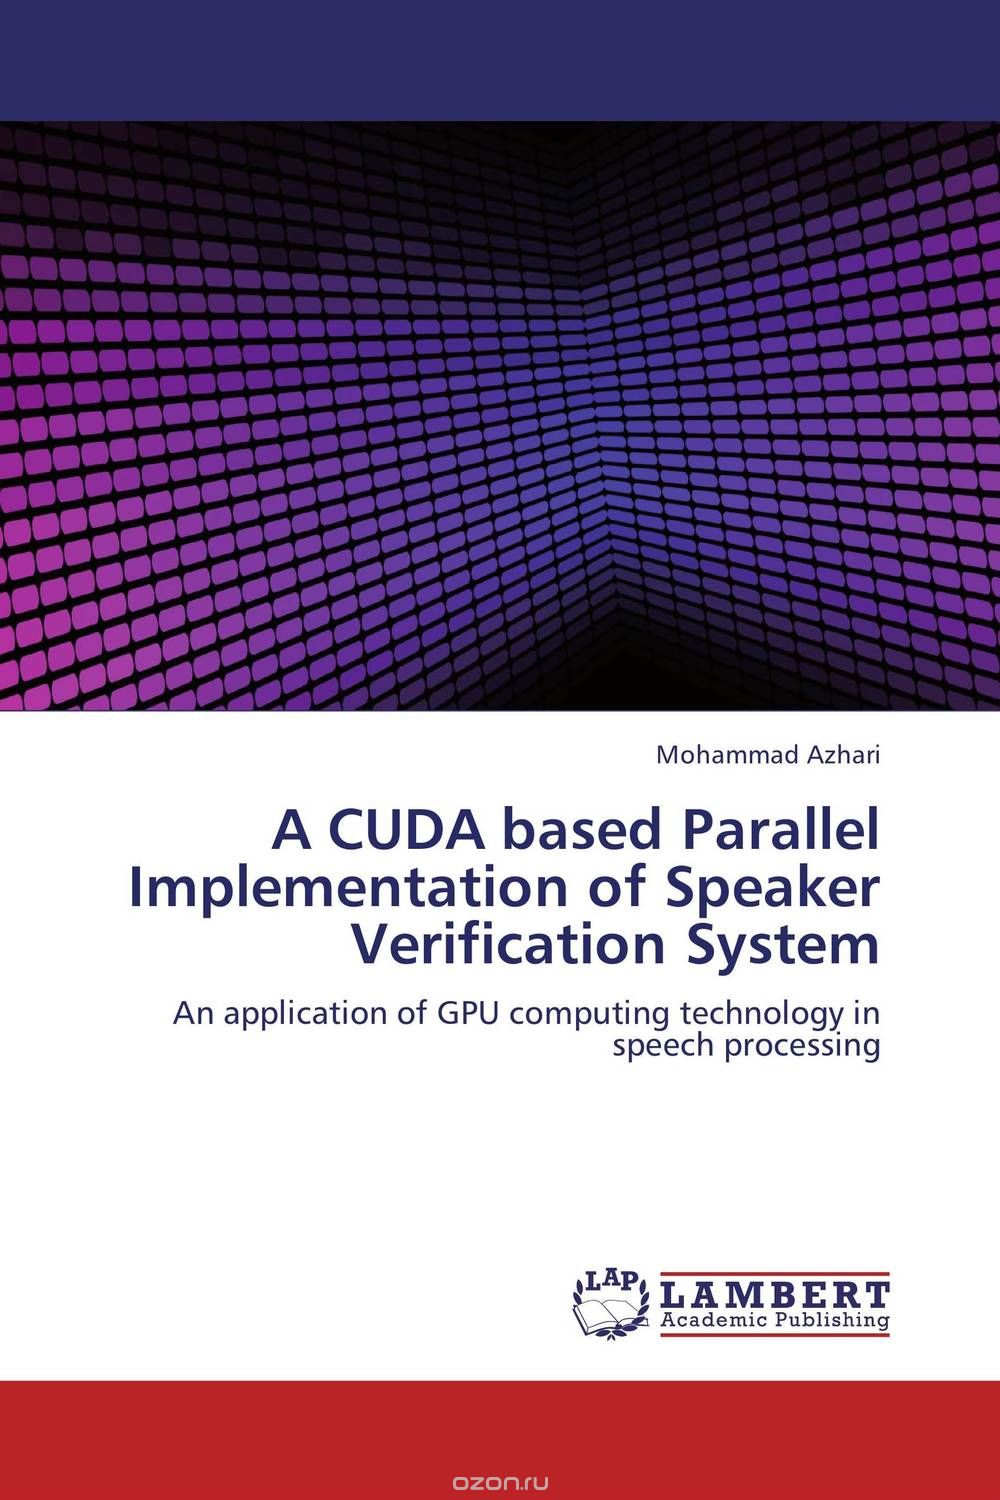 A CUDA based Parallel Implementation of Speaker Verification System